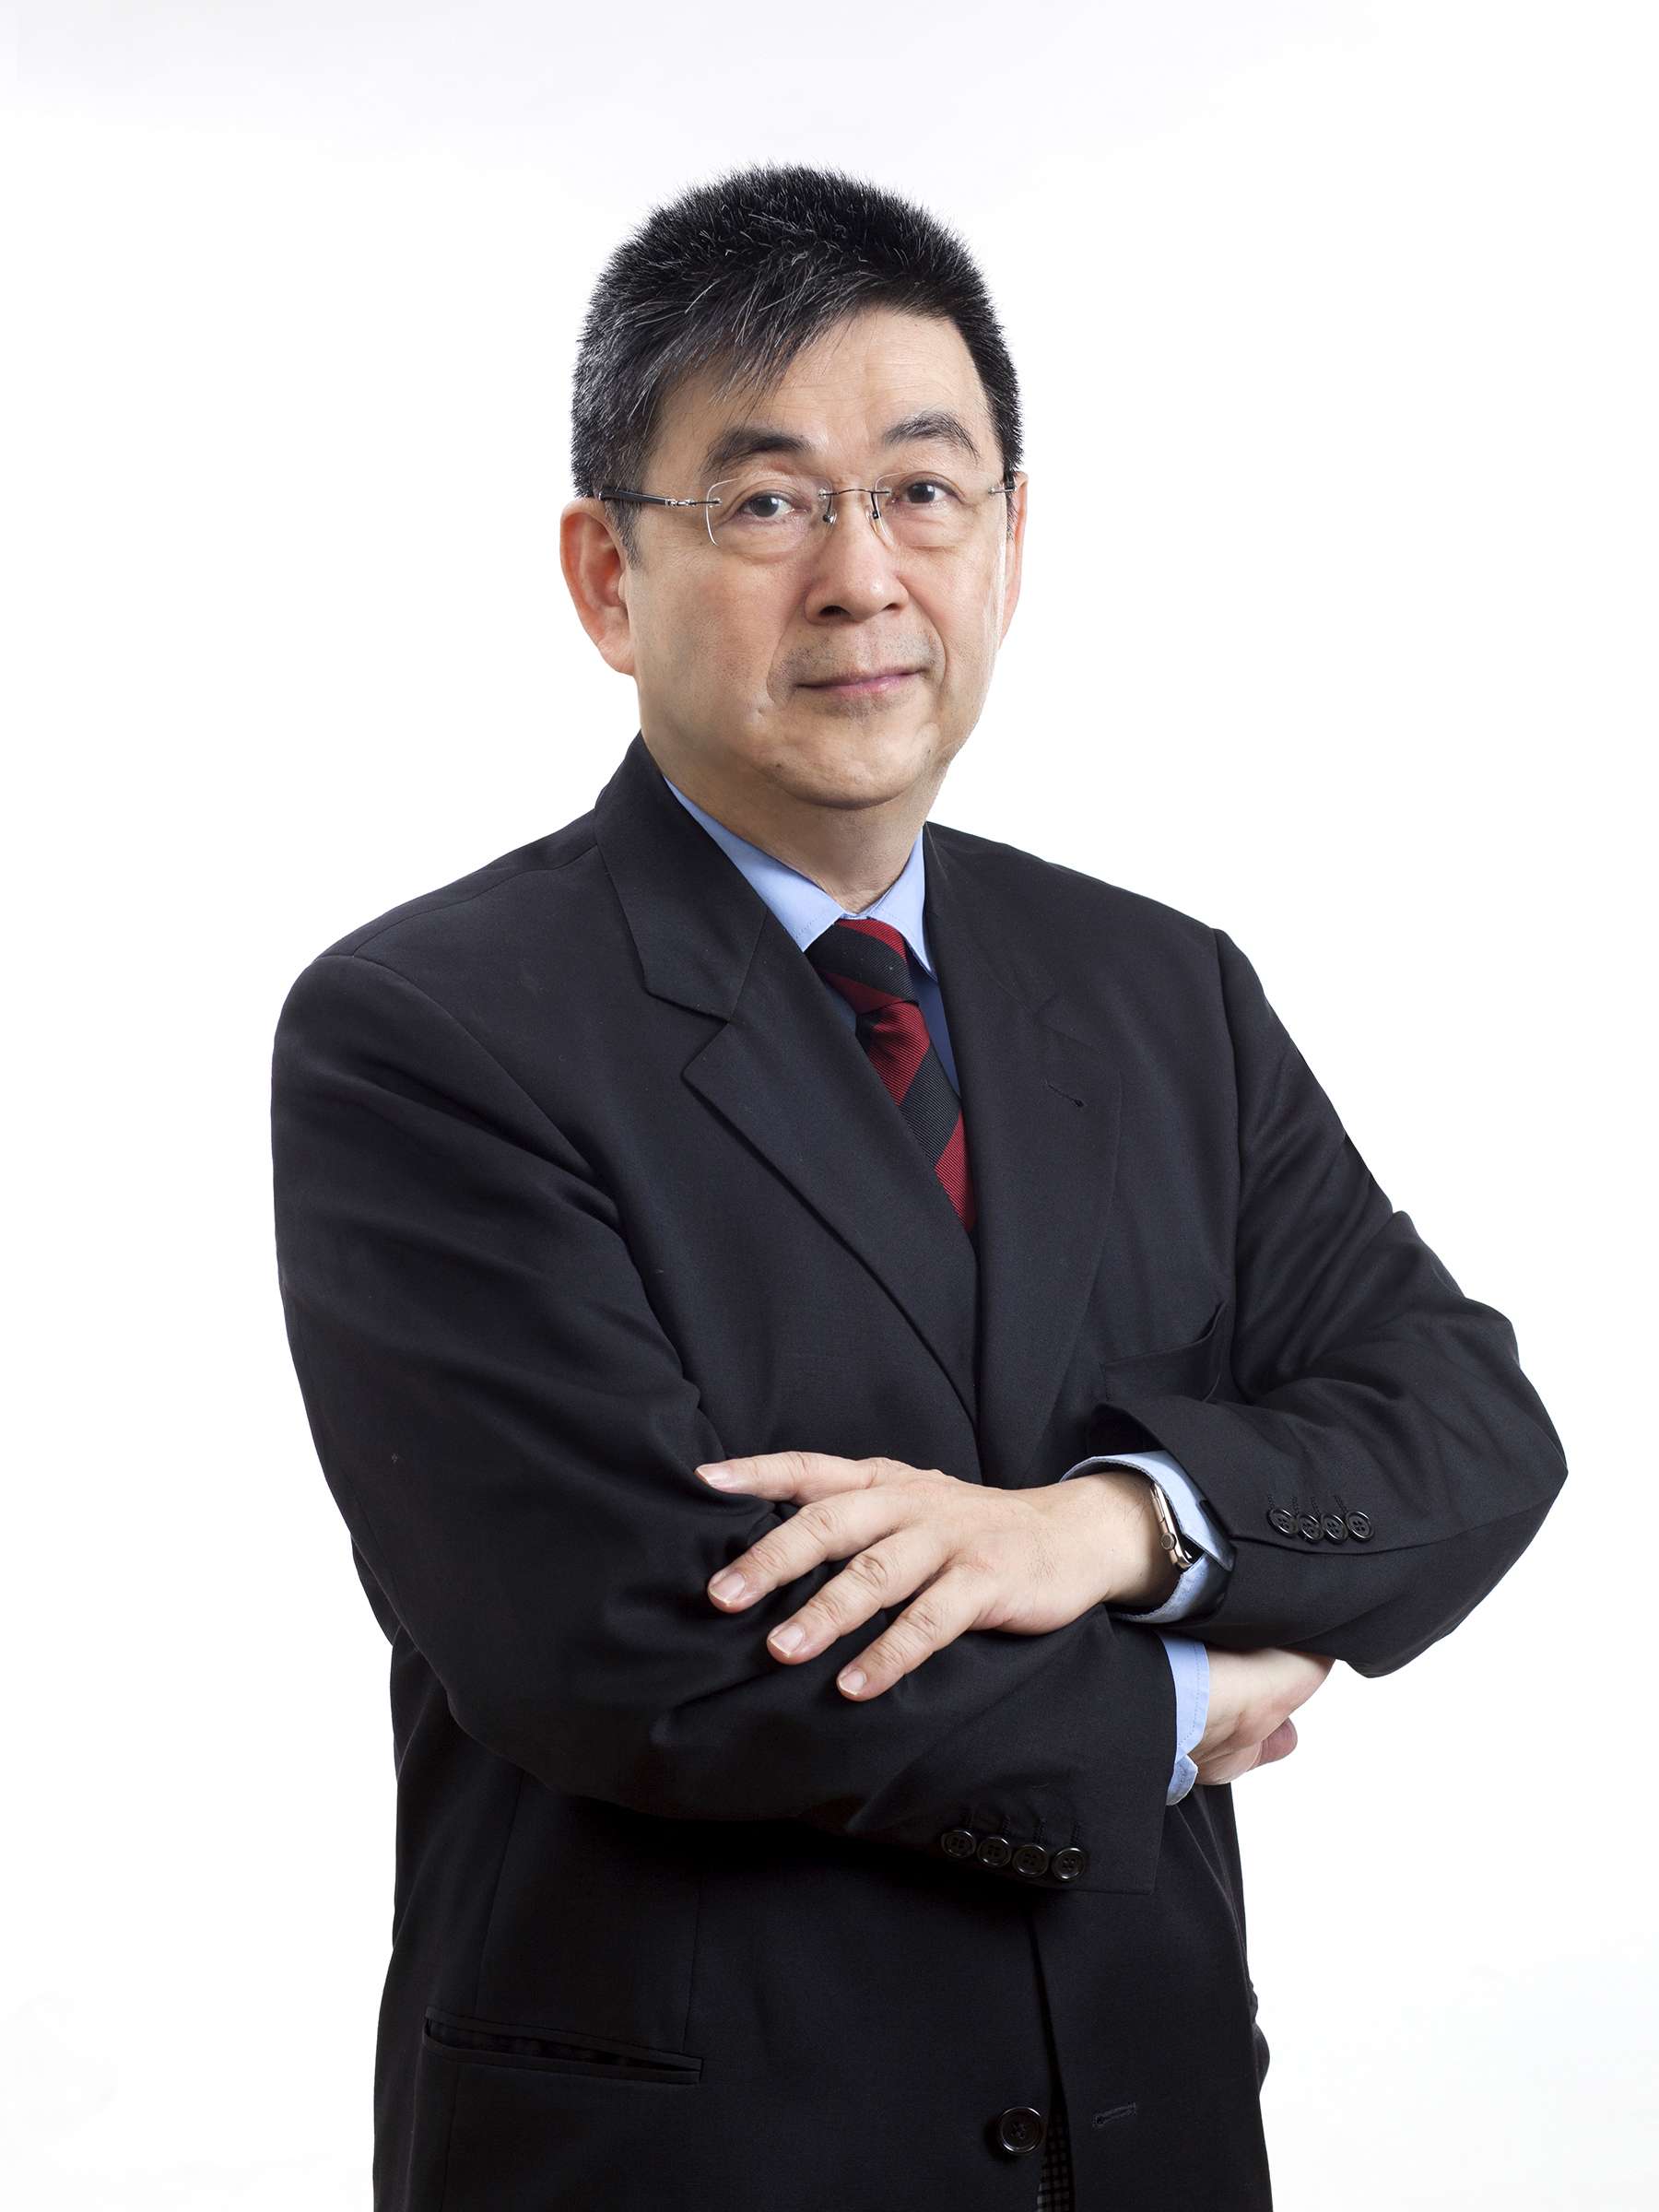 Professor Lee Tien-rein, president